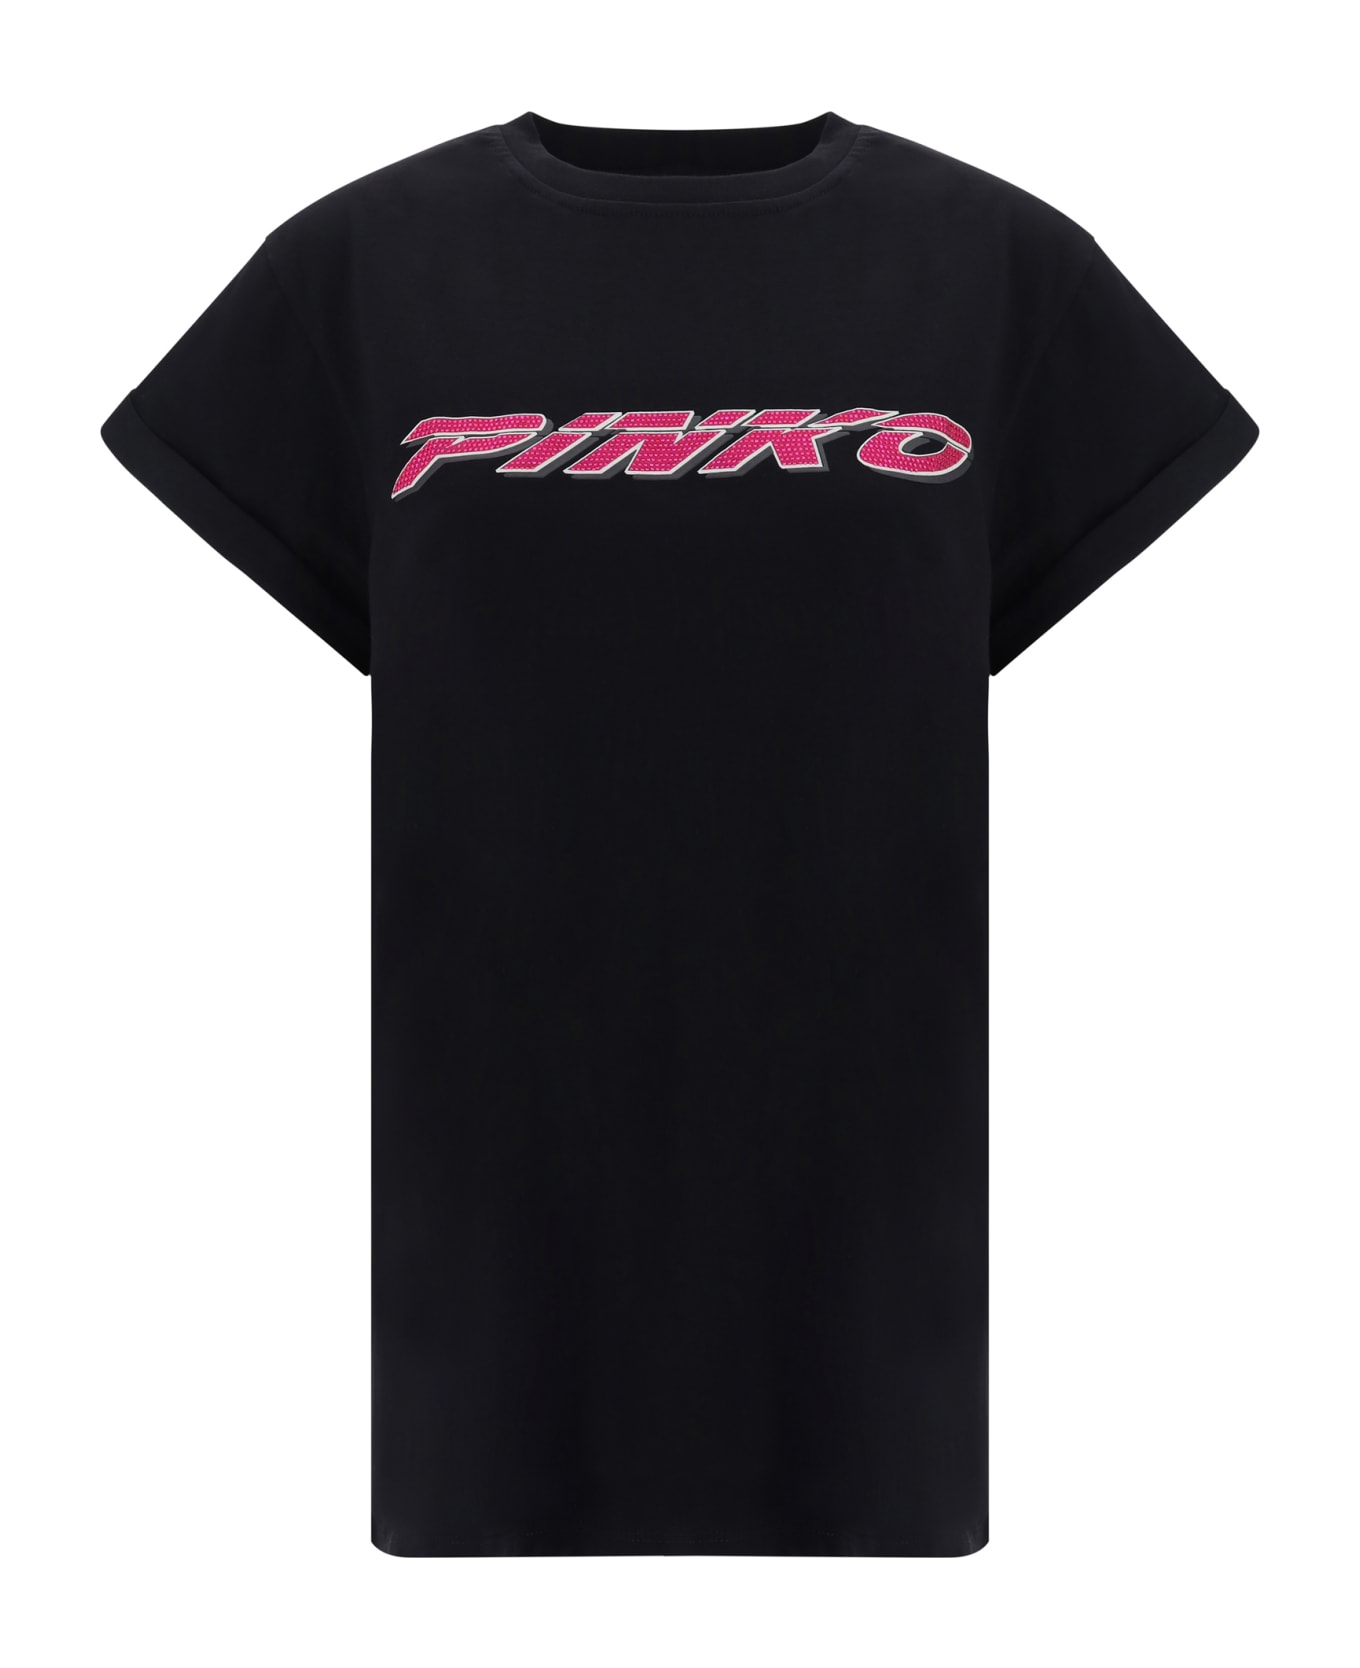 Pinko Telesto T-shirt - Nero/fuxia Tシャツ